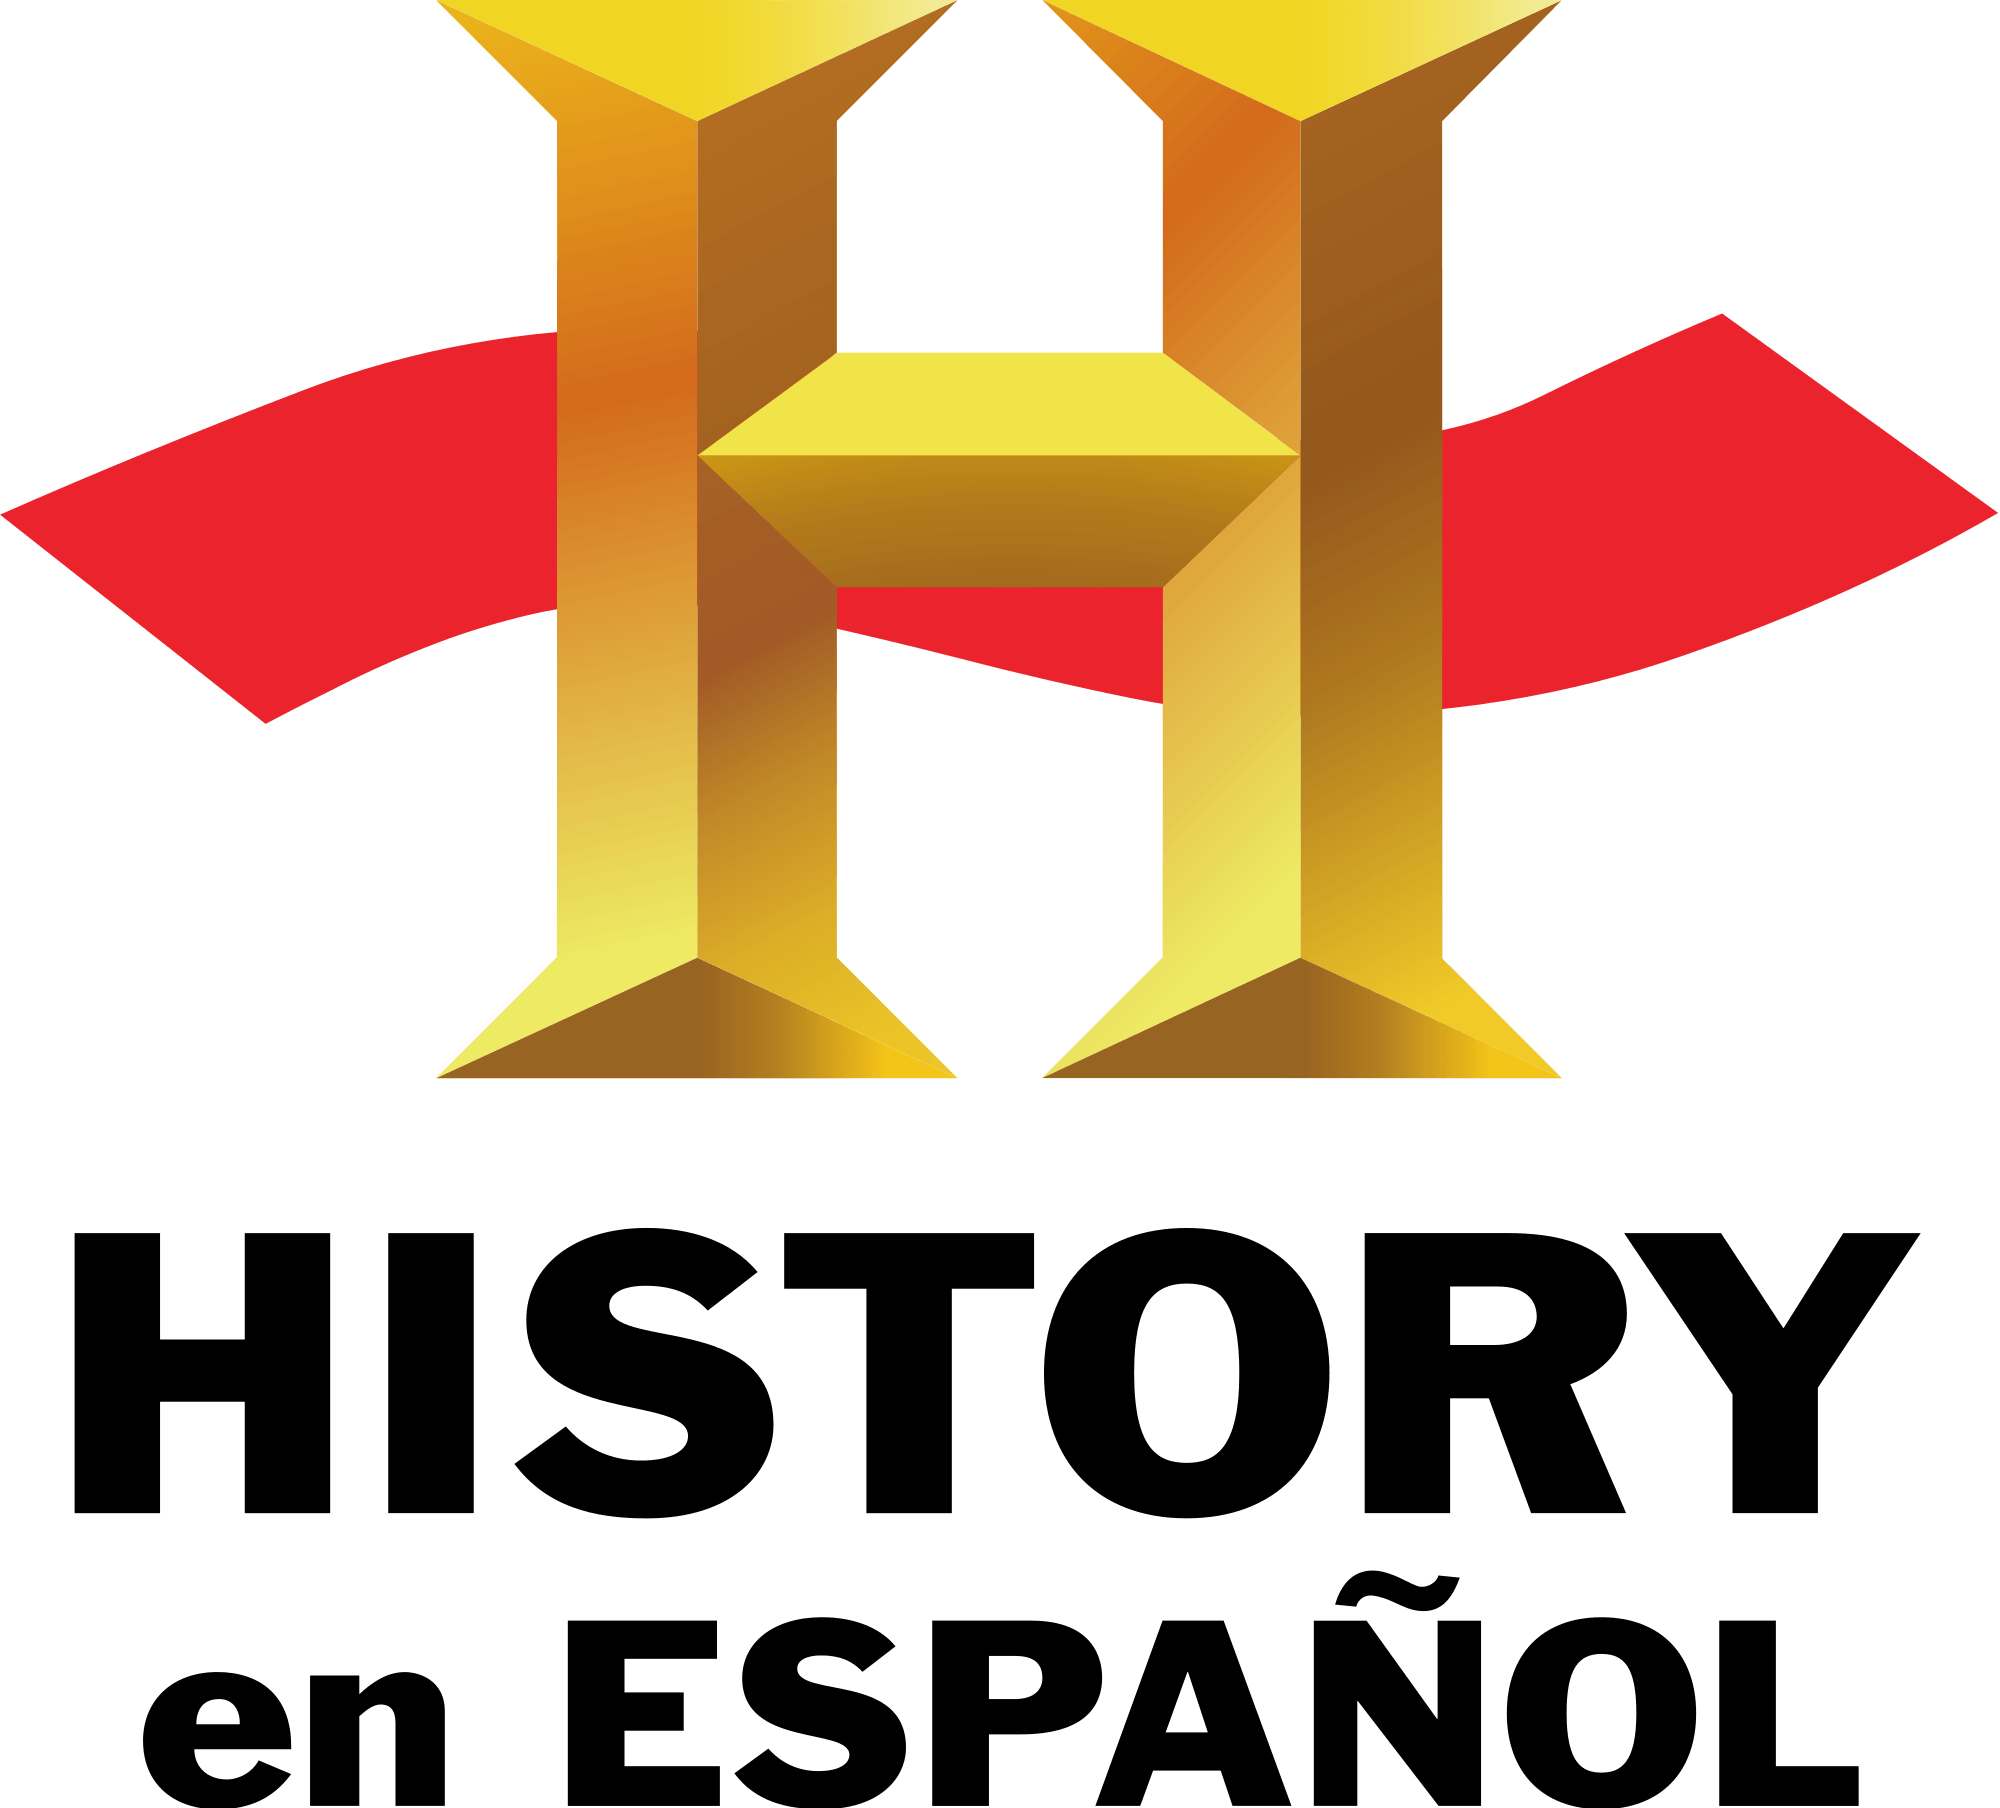 Espanol Logo - History en Español Logo.svg